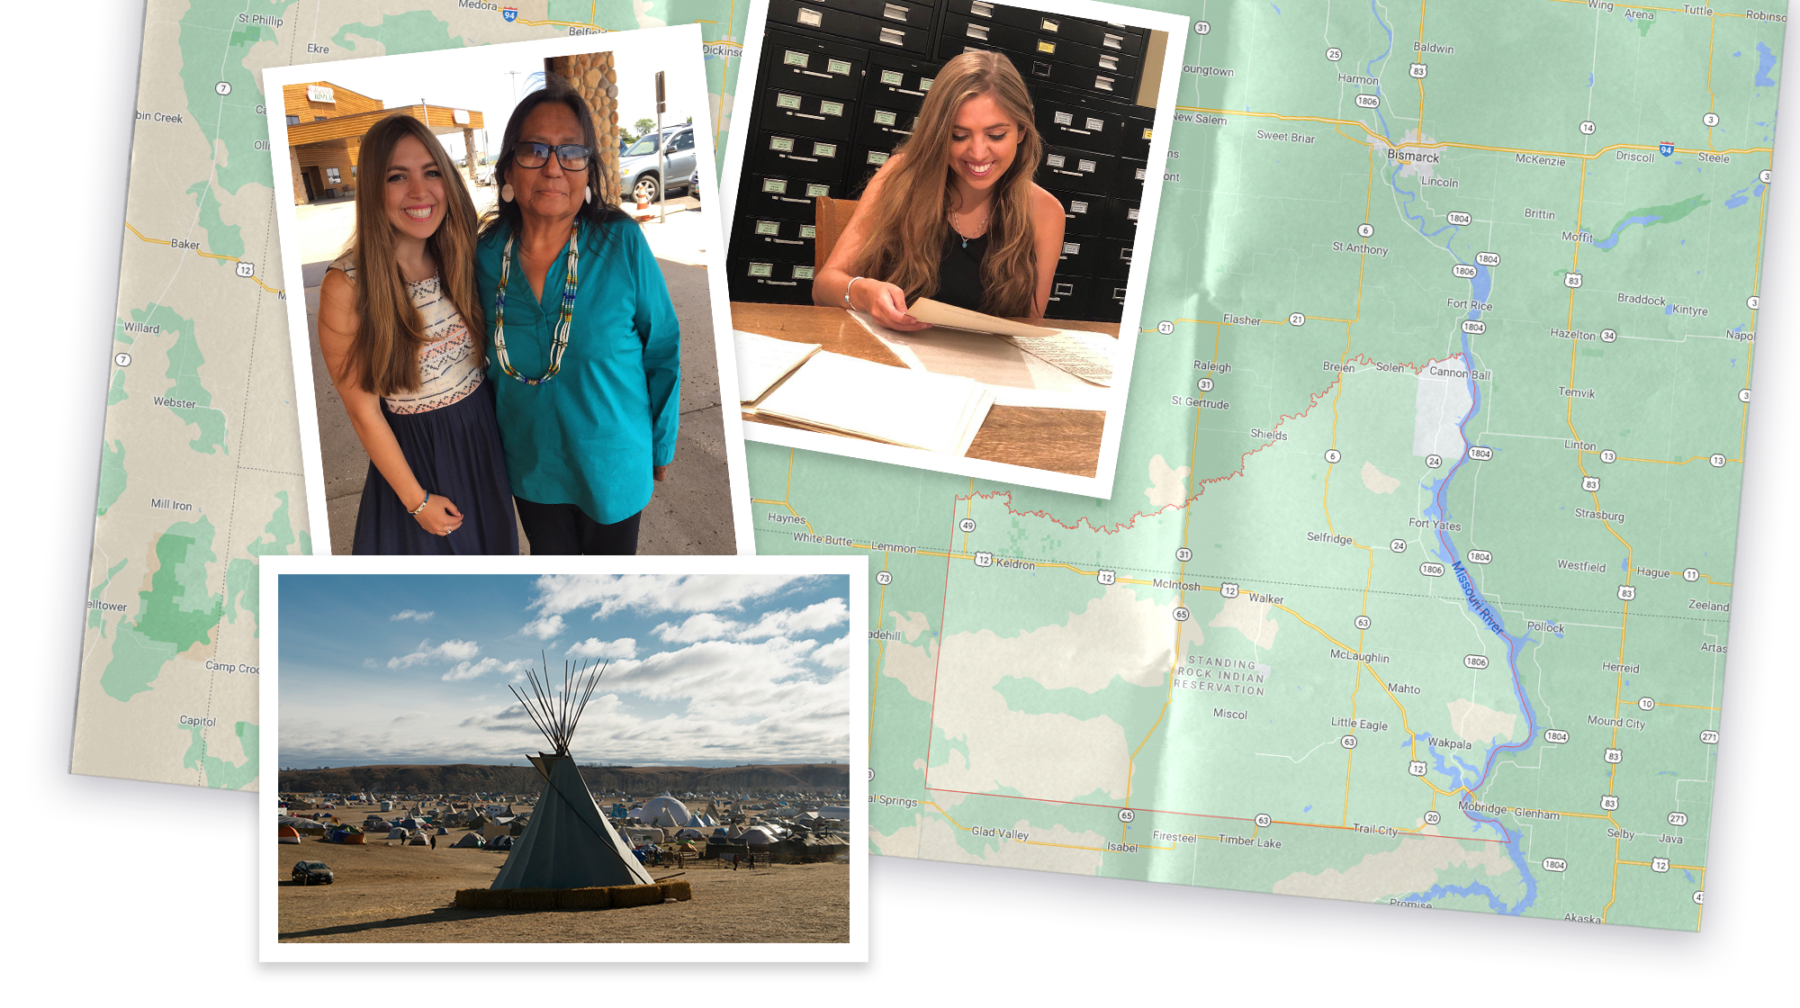 Collage of map and image of North Dakota and photos of Sarah Sadlier